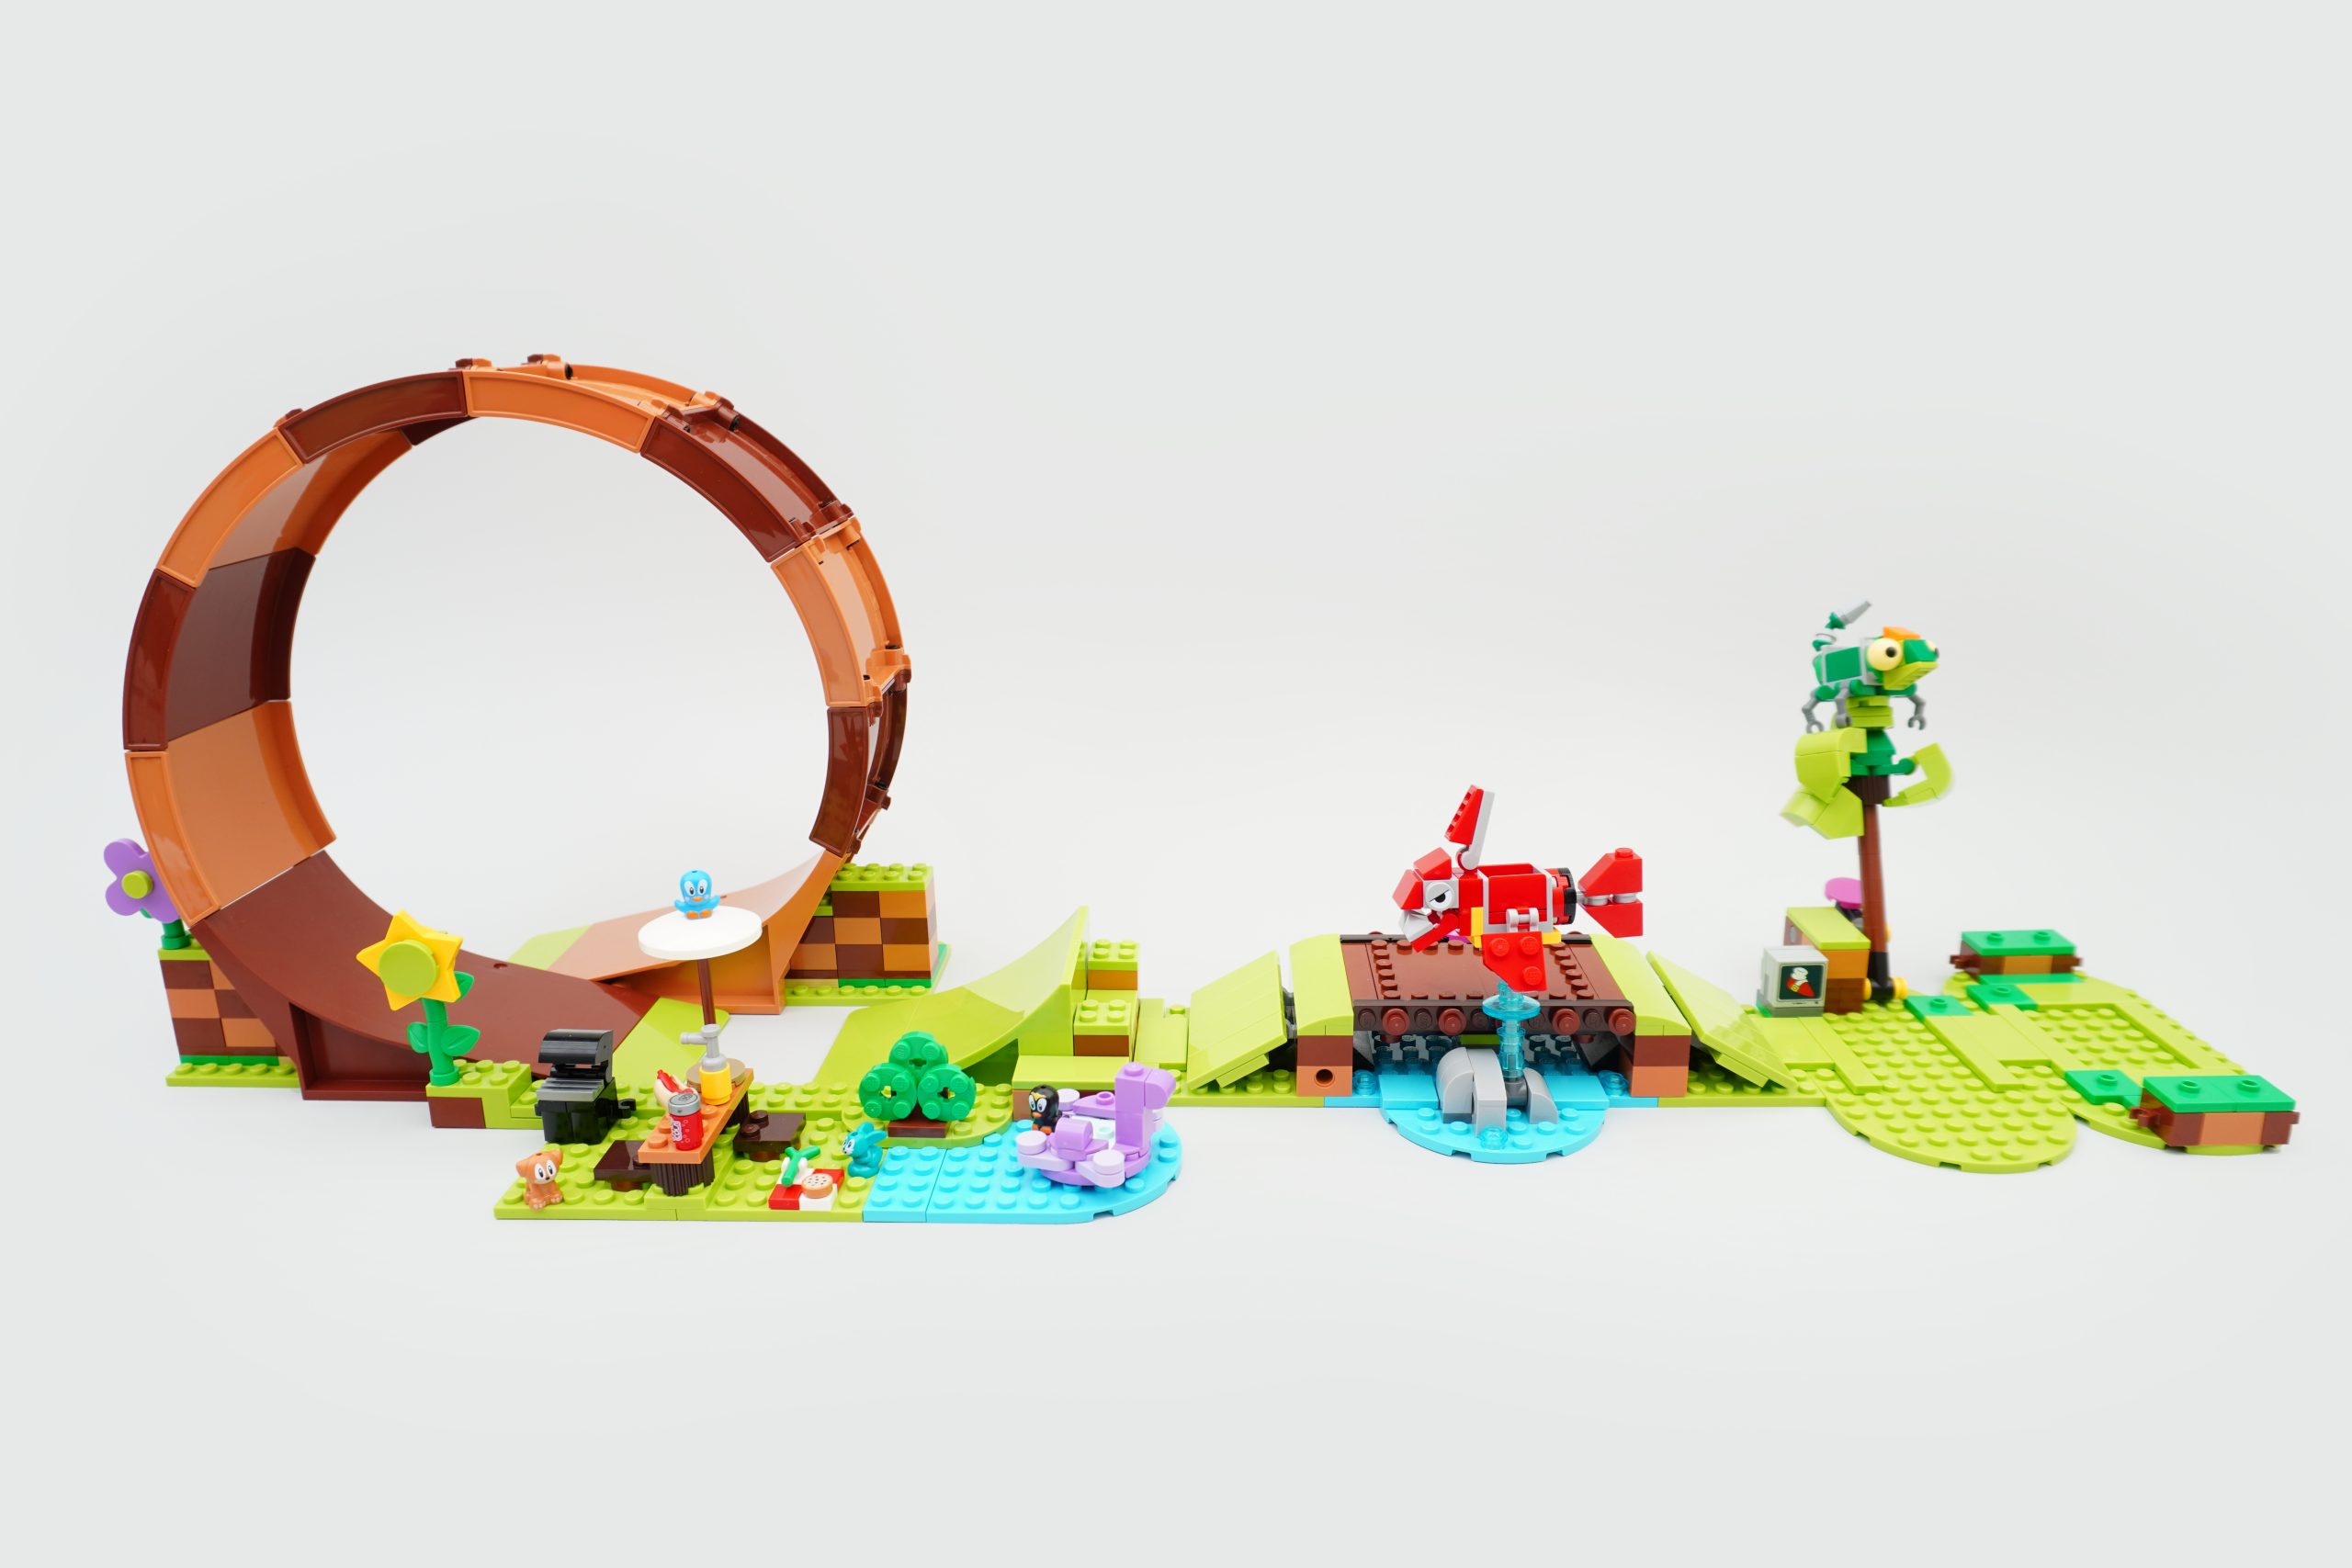 76994 Sonic's Green Hill Zone Loop Challenge – Bricks & Minifigs